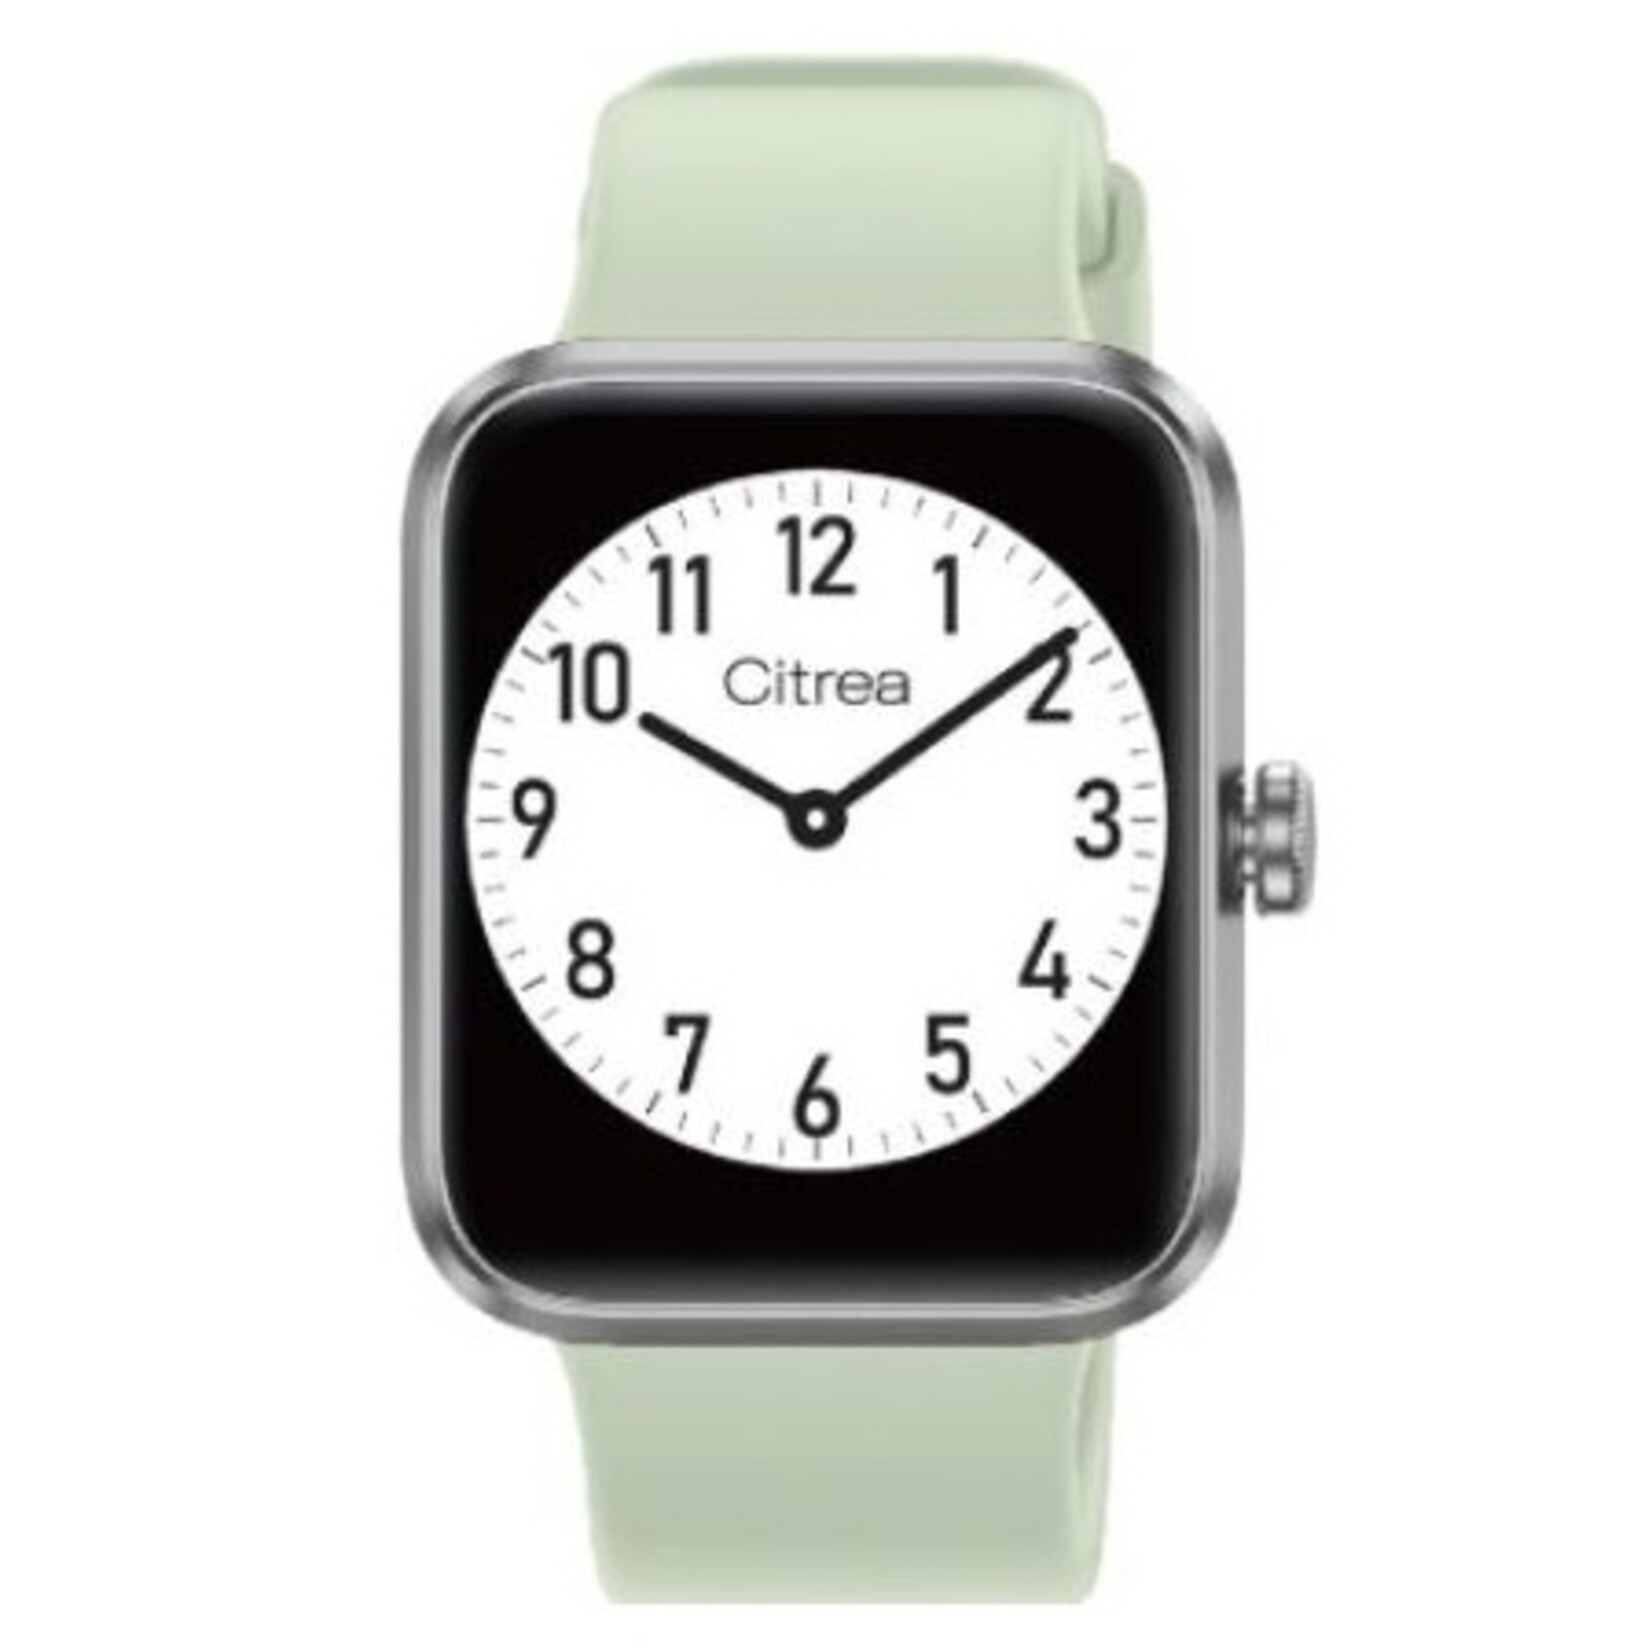 Citrea Coolwatch citrea smartwatch x01a-005 light green v2.0